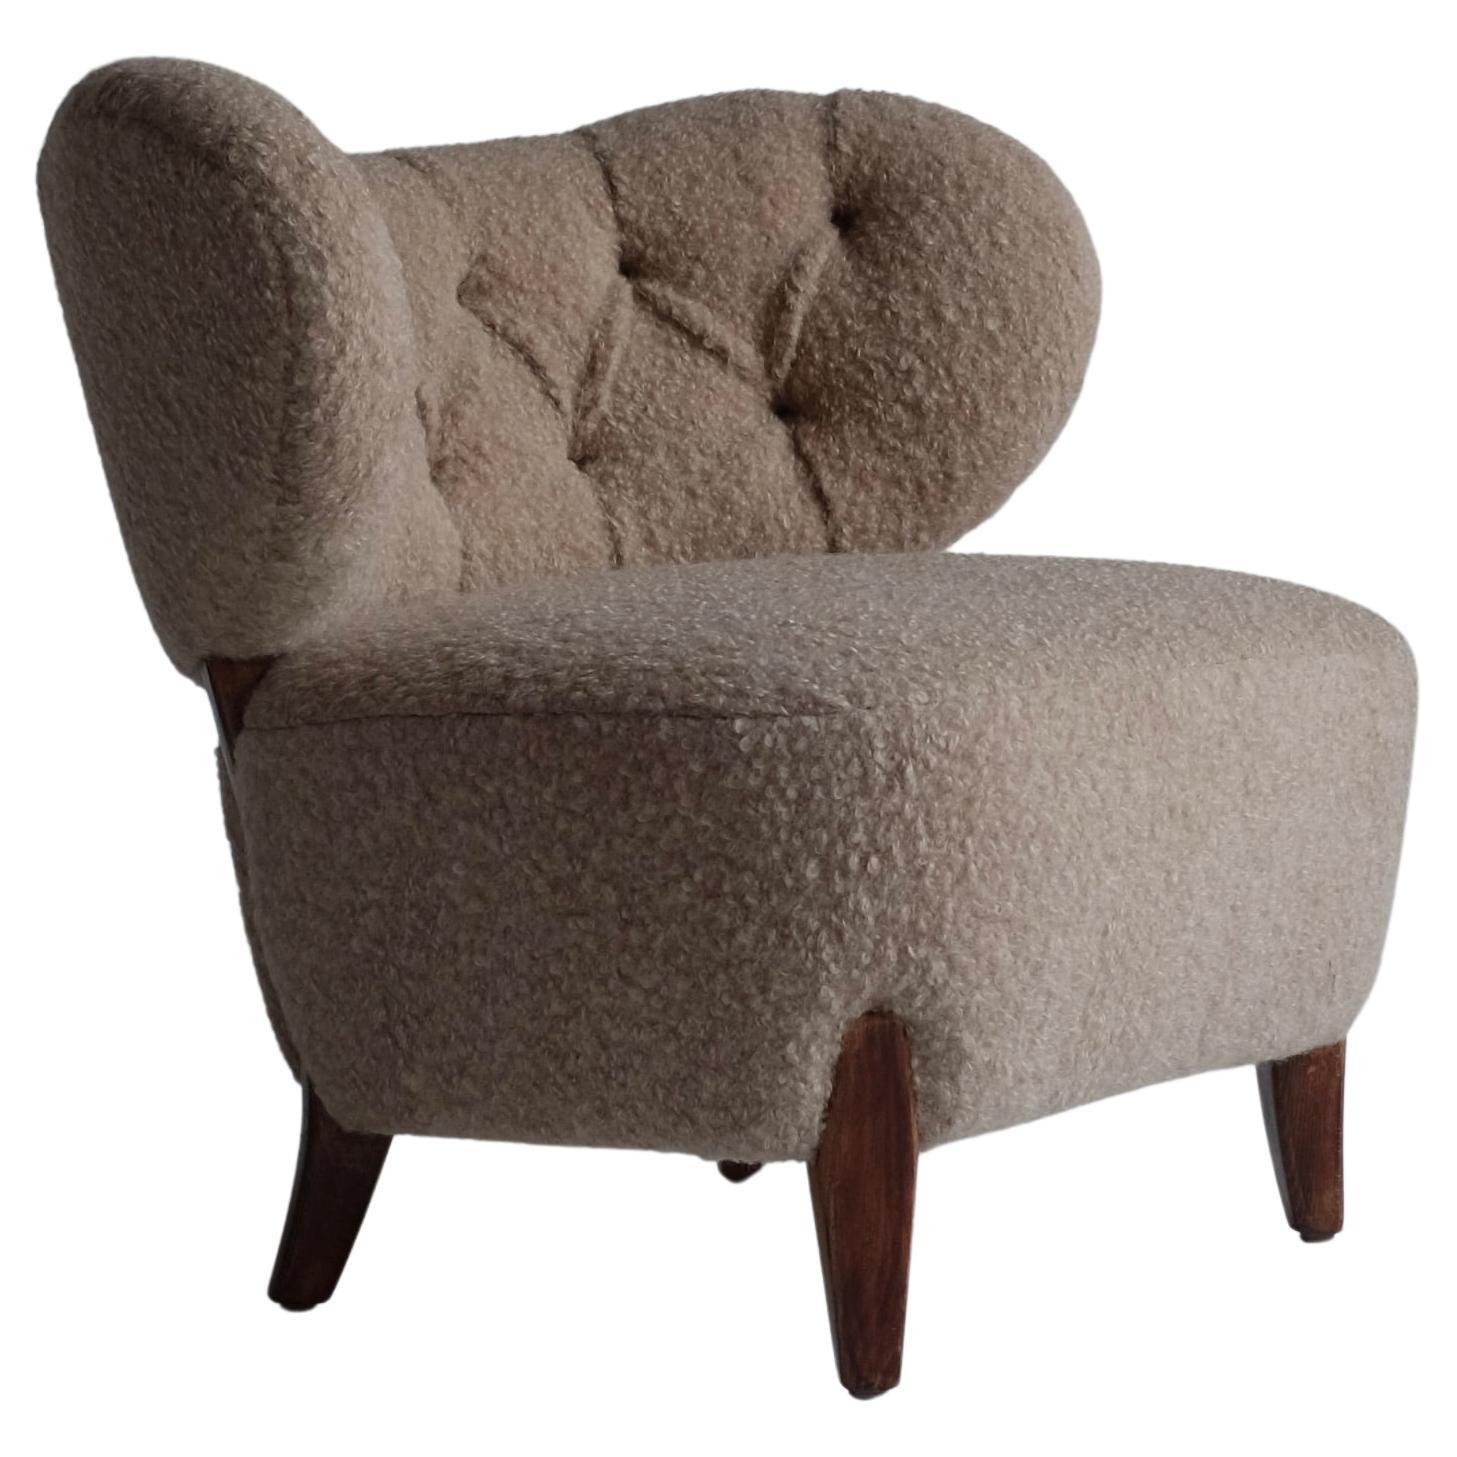 Boet Lounge Chairs